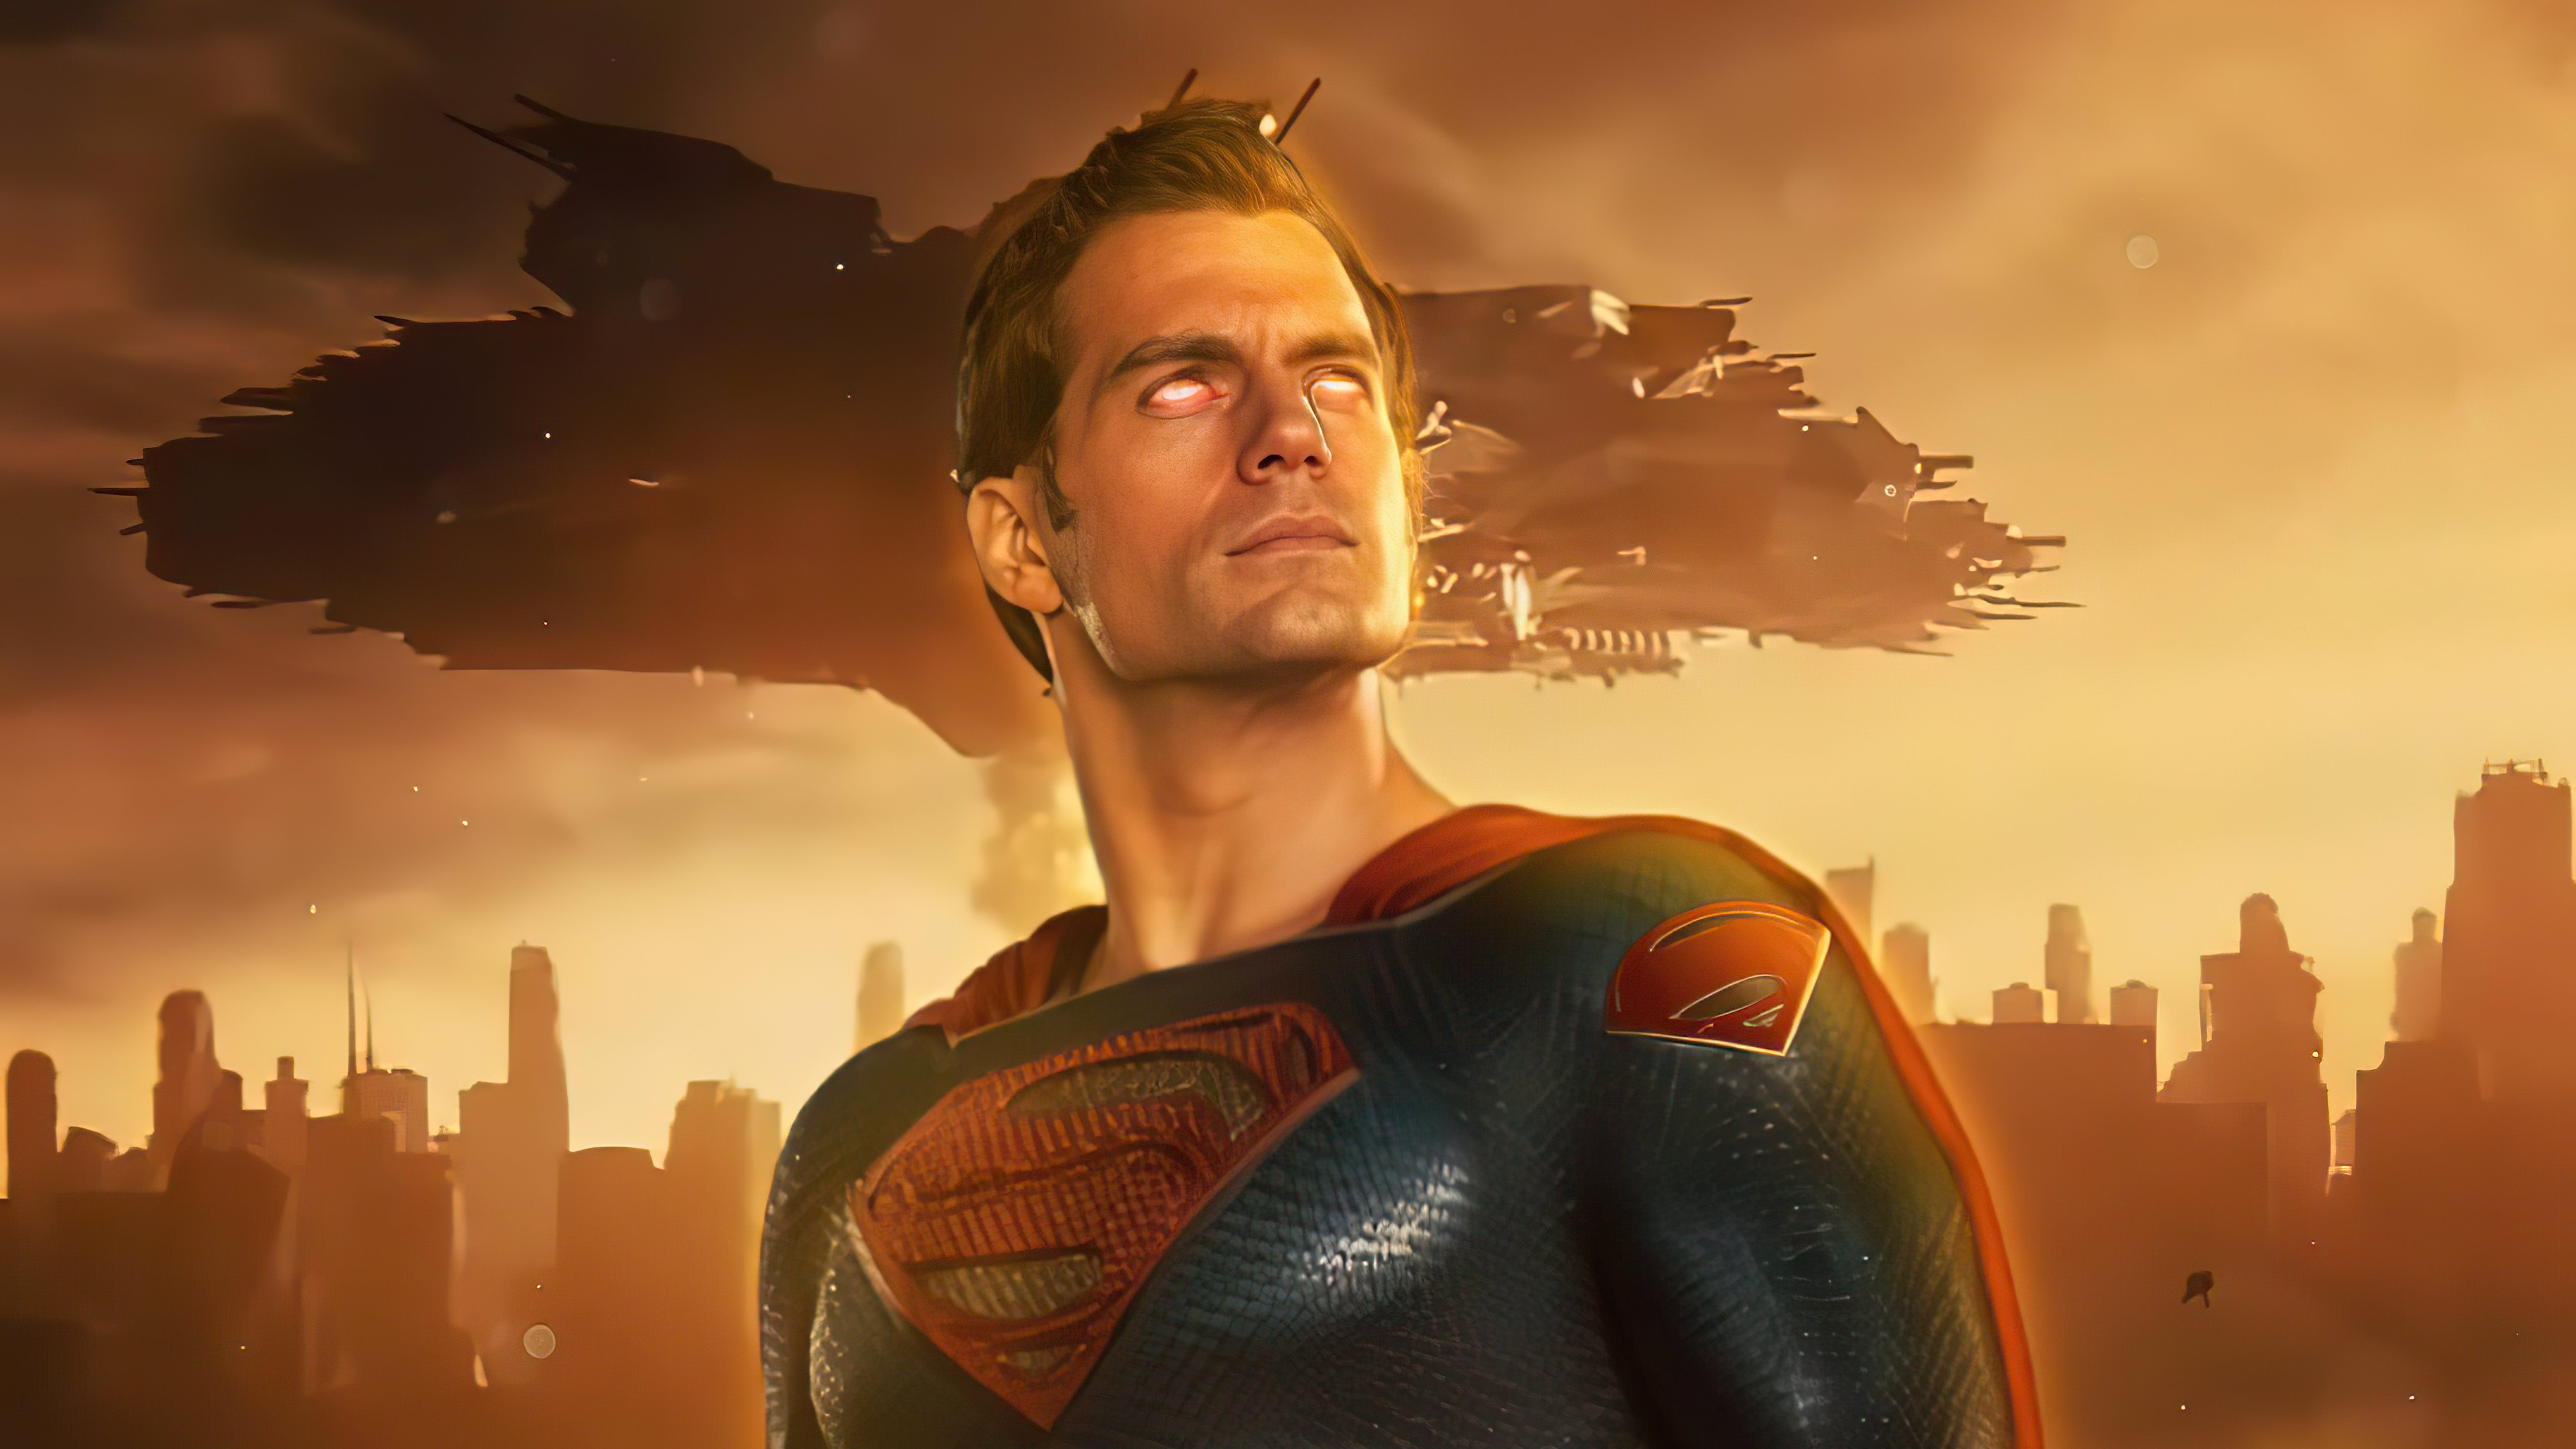 Henry Cavill Superman Wallpapers - Top Free Henry Cavill Superman